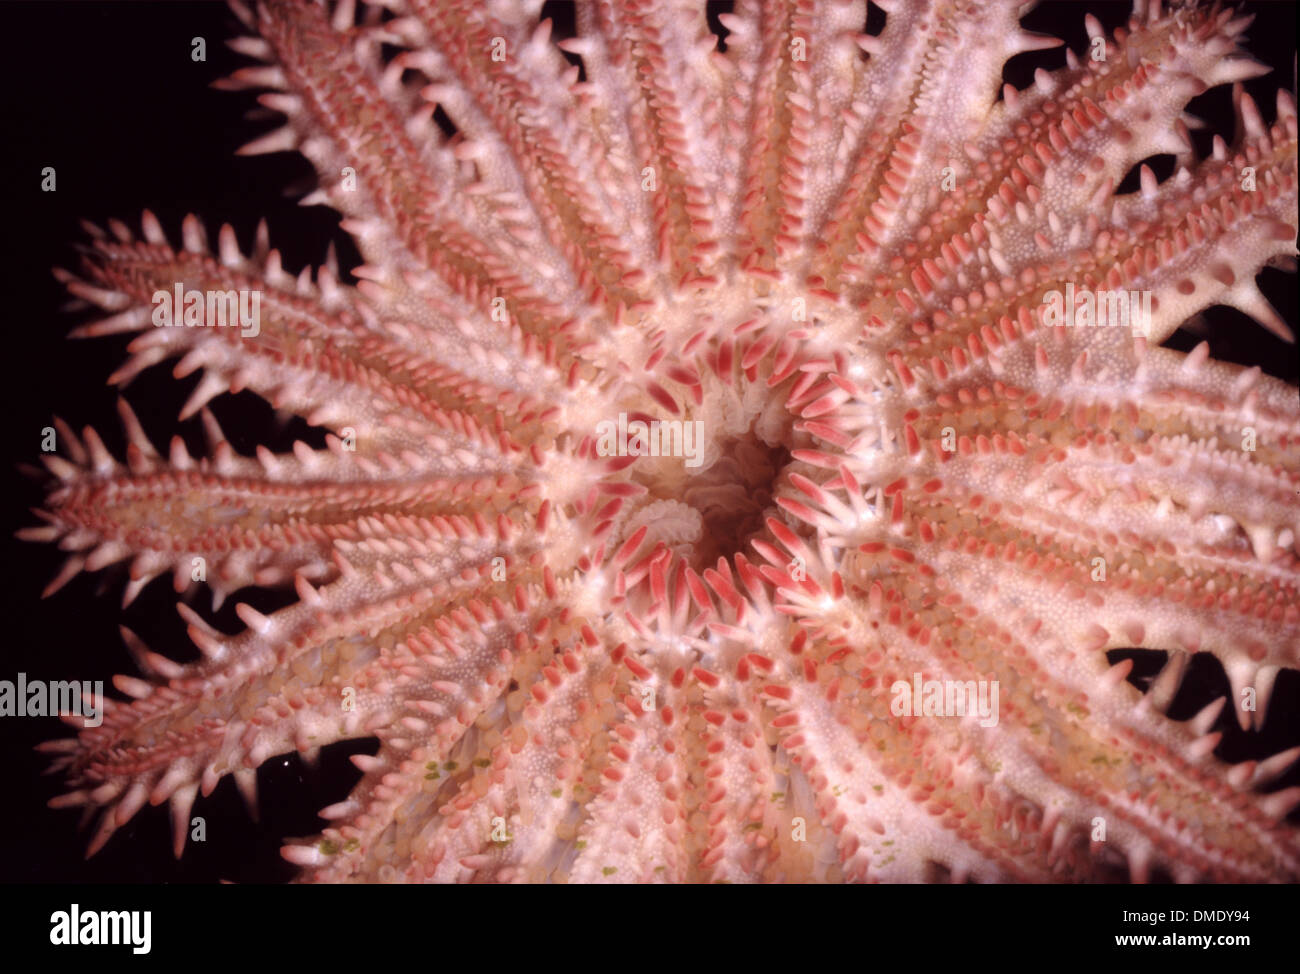 Crown-of-thorns starfish (Acanthaster planci) Stock Photo